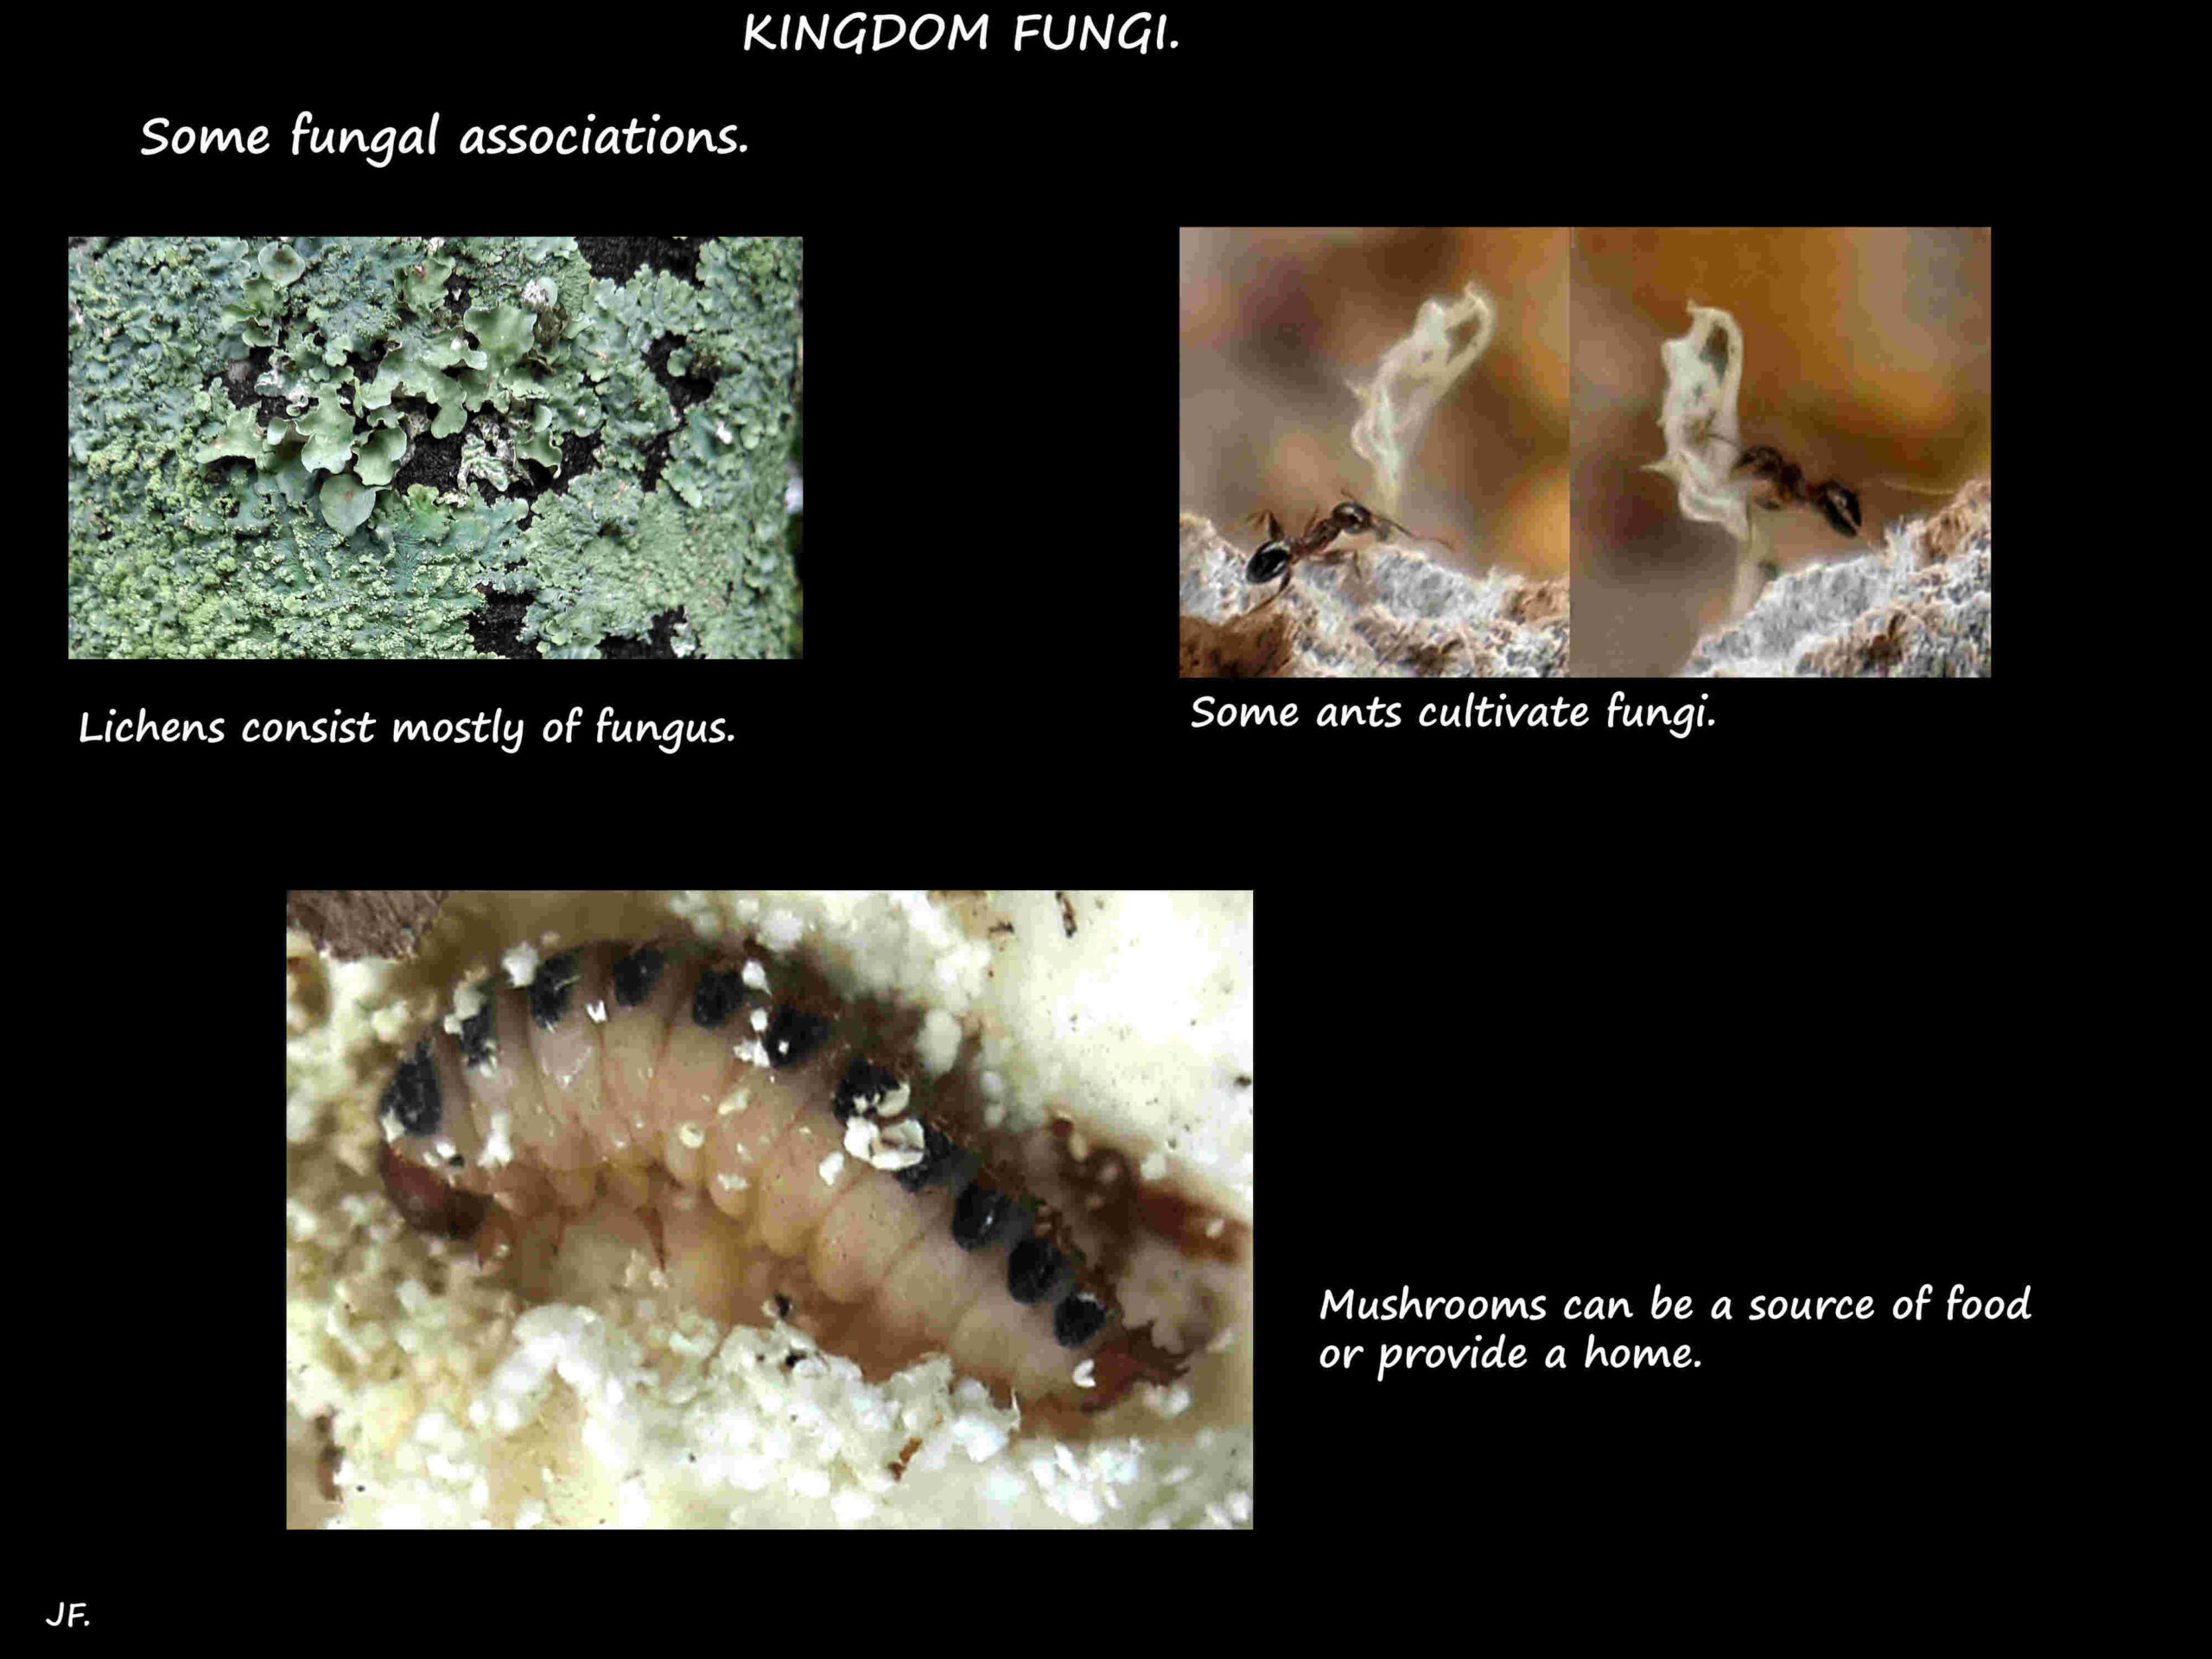 4 Fungal associations